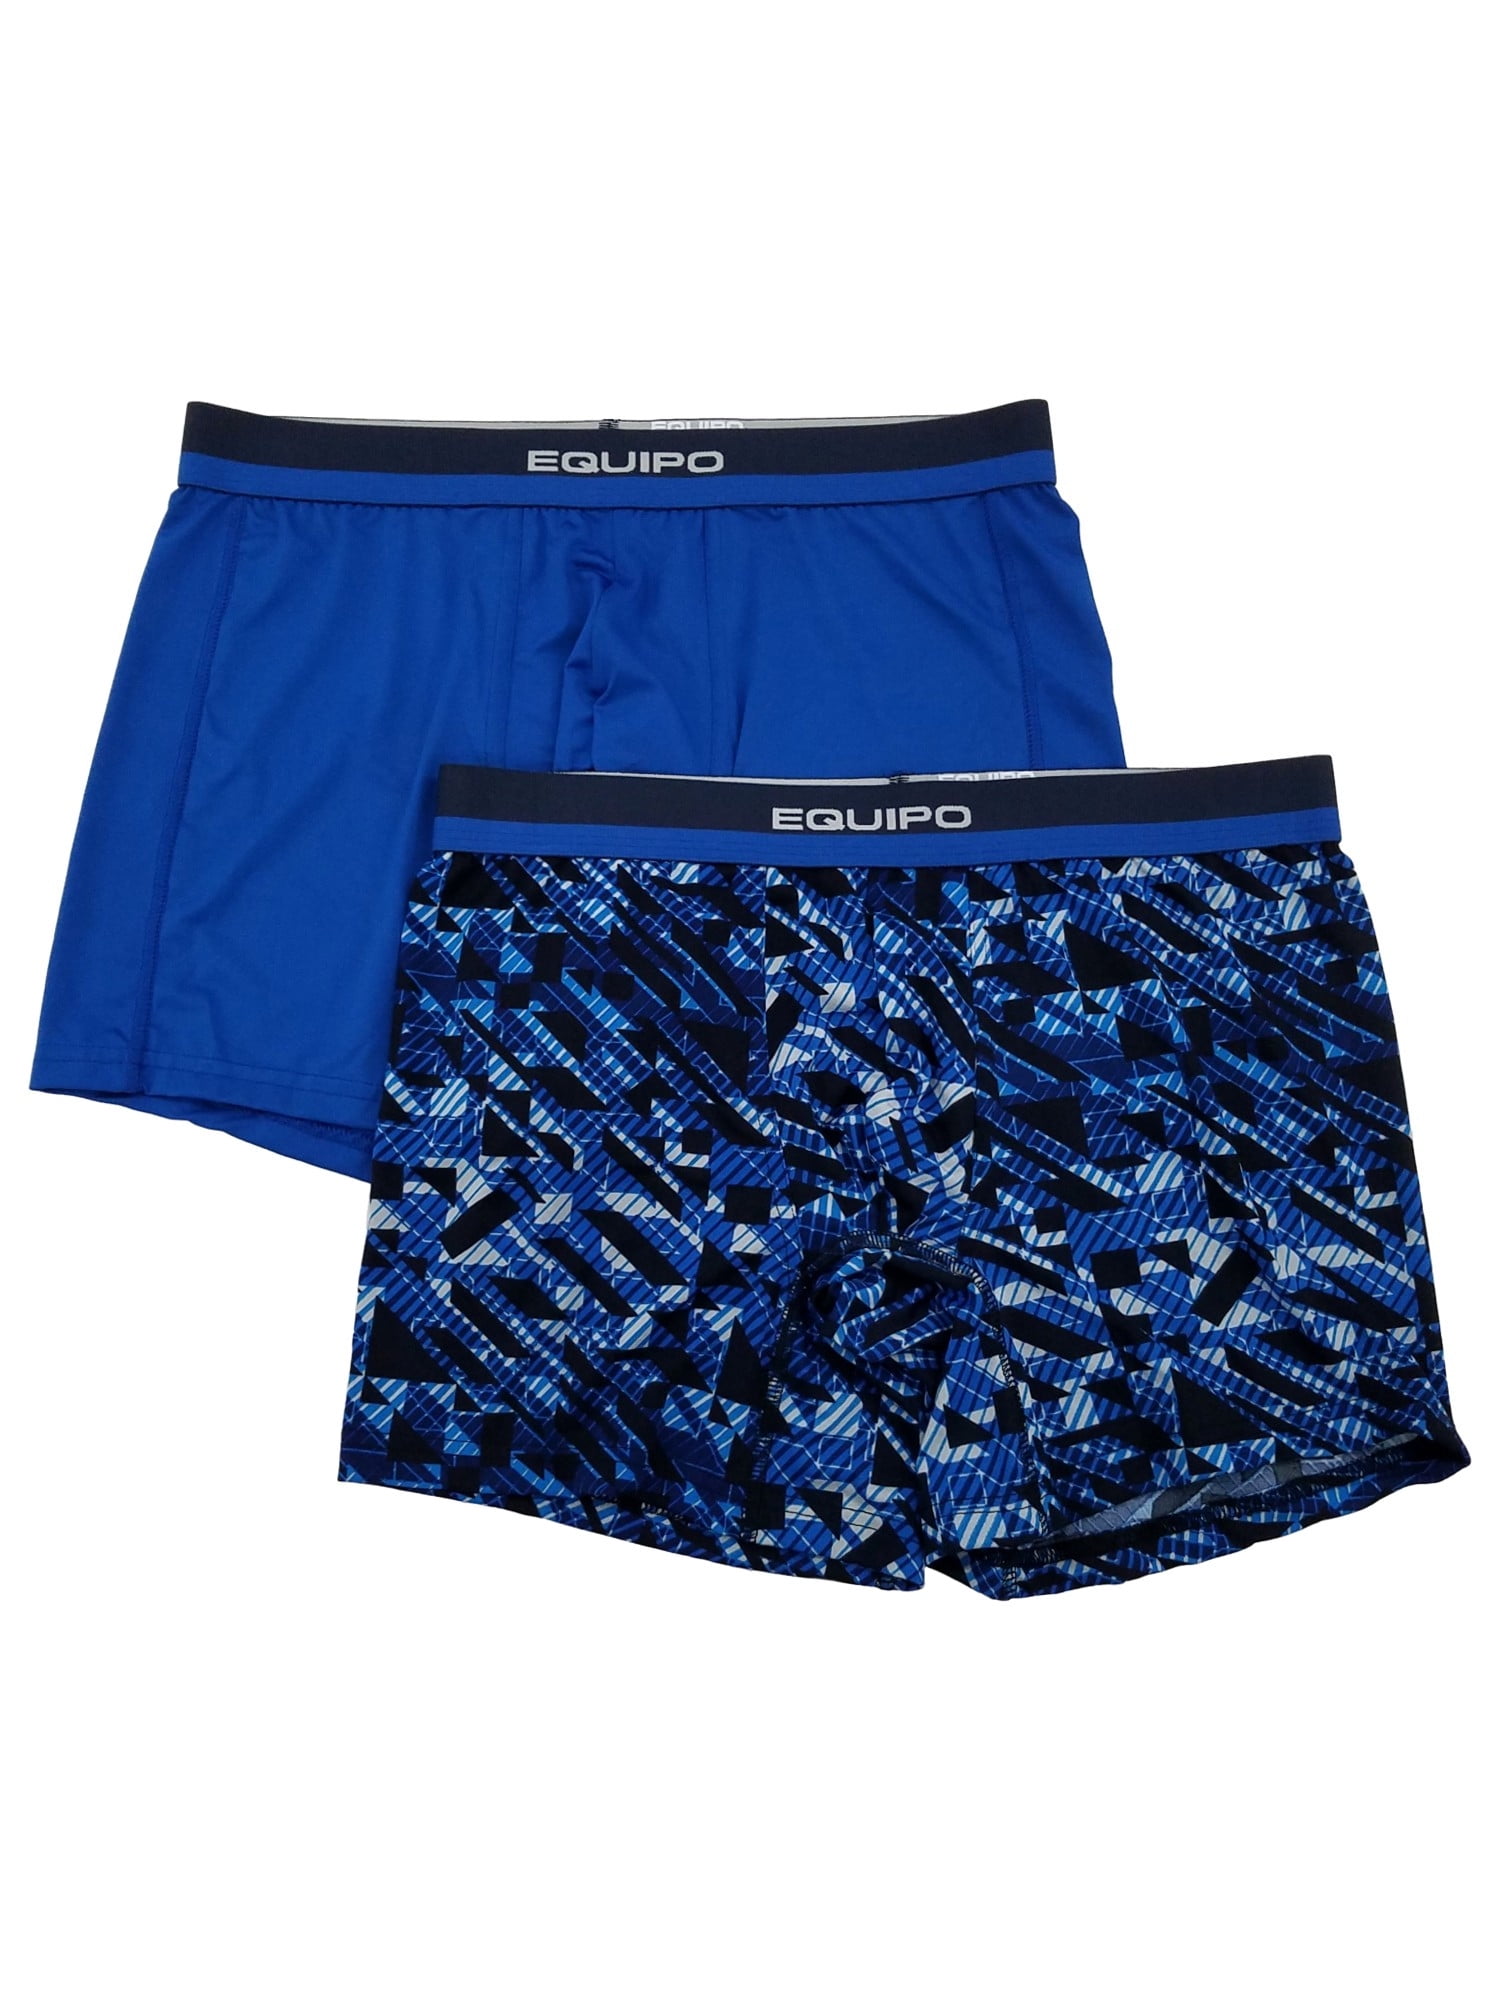 Men Equipo 2-Pack Boxers Brief Blue Pattern Performance 4-Way Stretch Underwear 